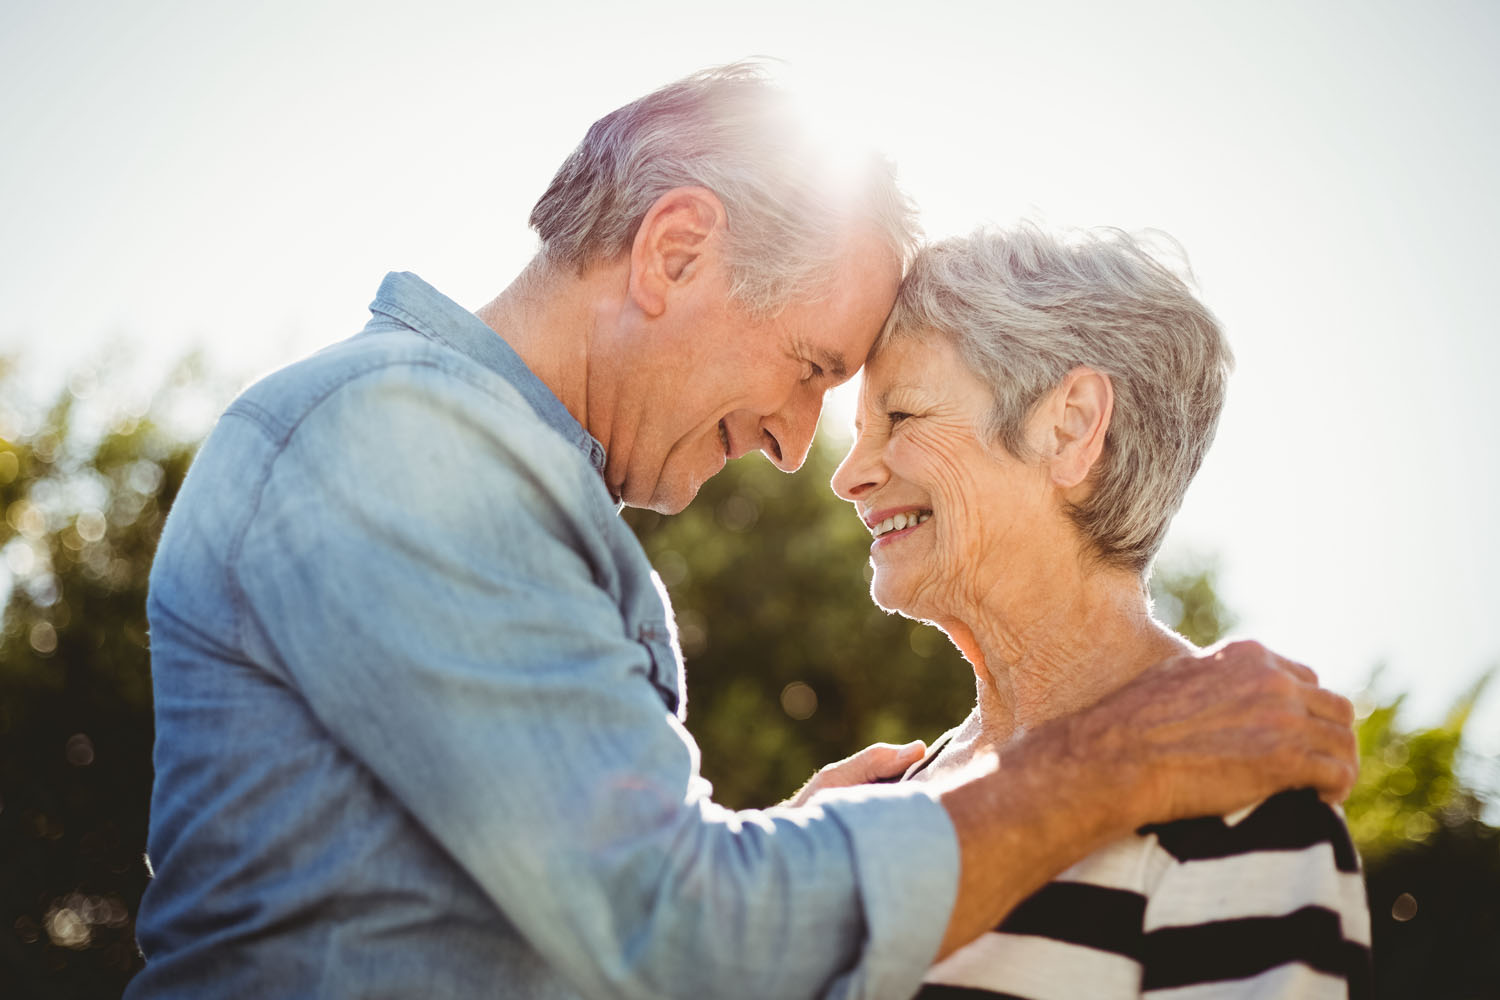 Internal Medicine photo with happy senior couple